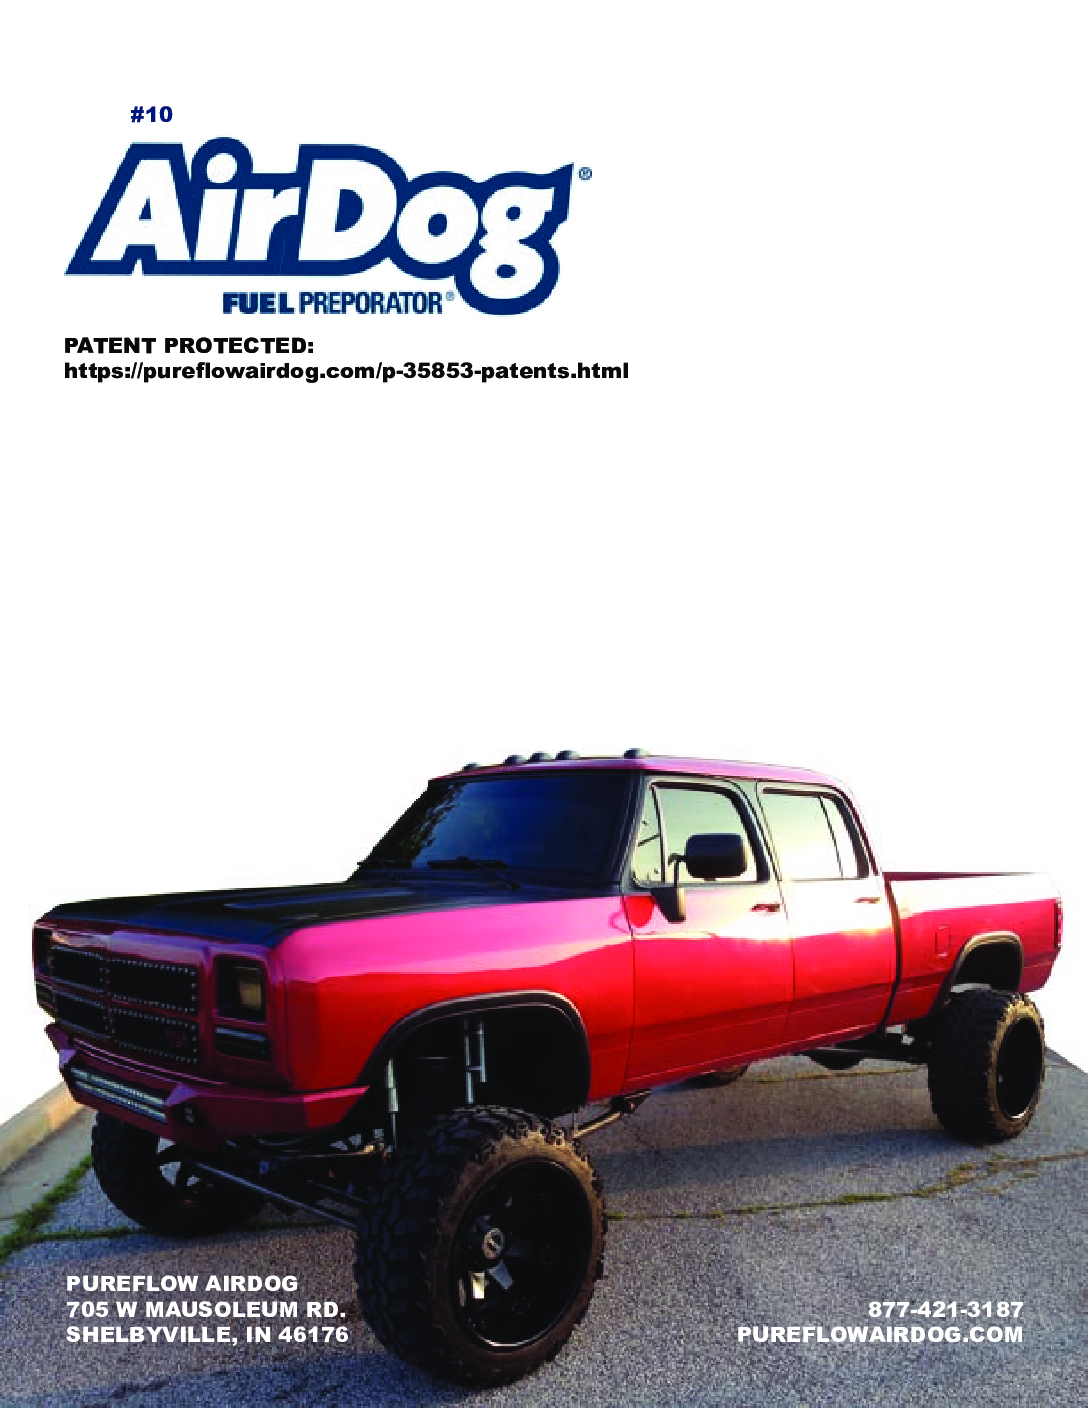 Airdog fuel preporator 1989-1993 CUMMINS
 INSTALLATION INSTRUCTIONS